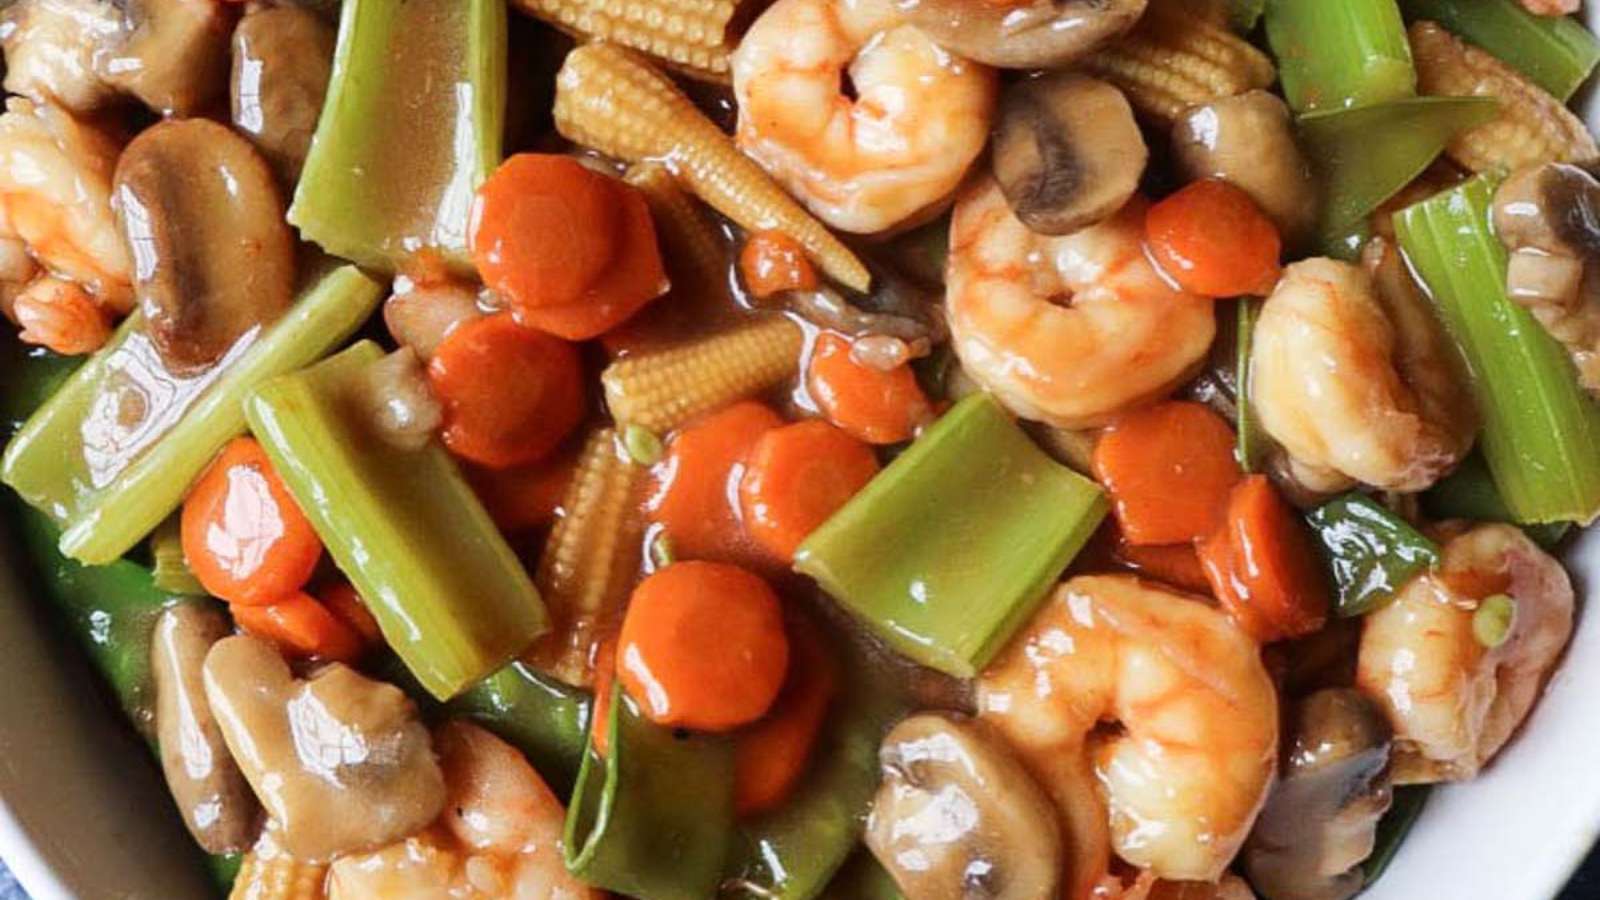 A bowl of stir fried vegetables with shrimp and mushrooms.